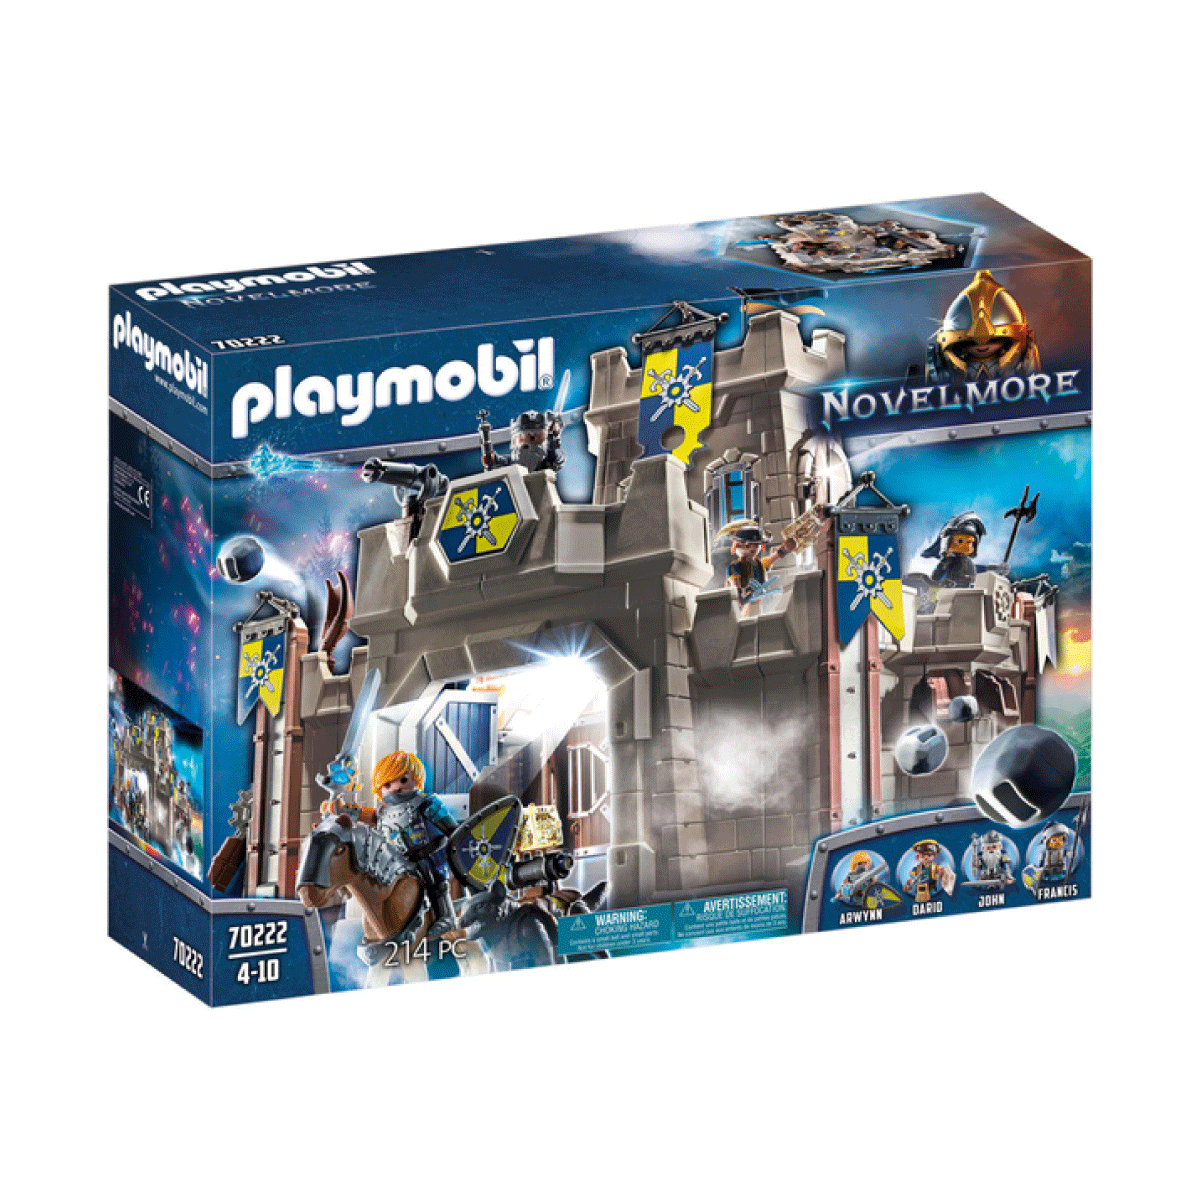 Playmobil Fortaleza Novelmore